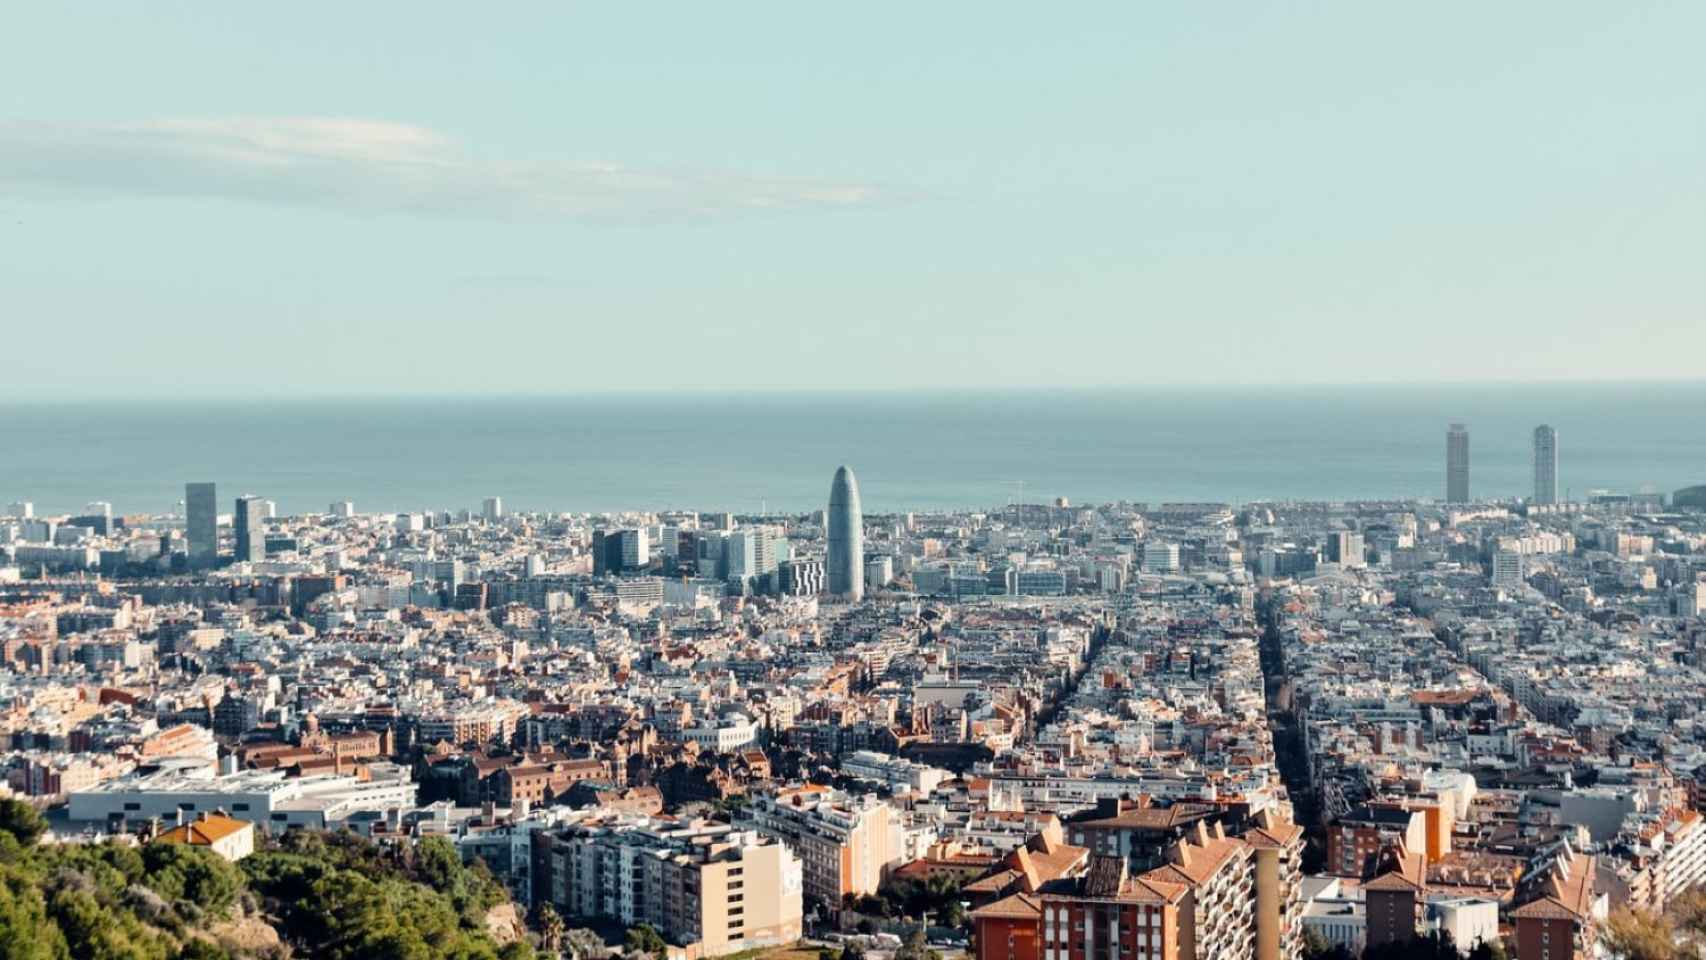 Vista panorámica de Barcelona / ARCHIVO